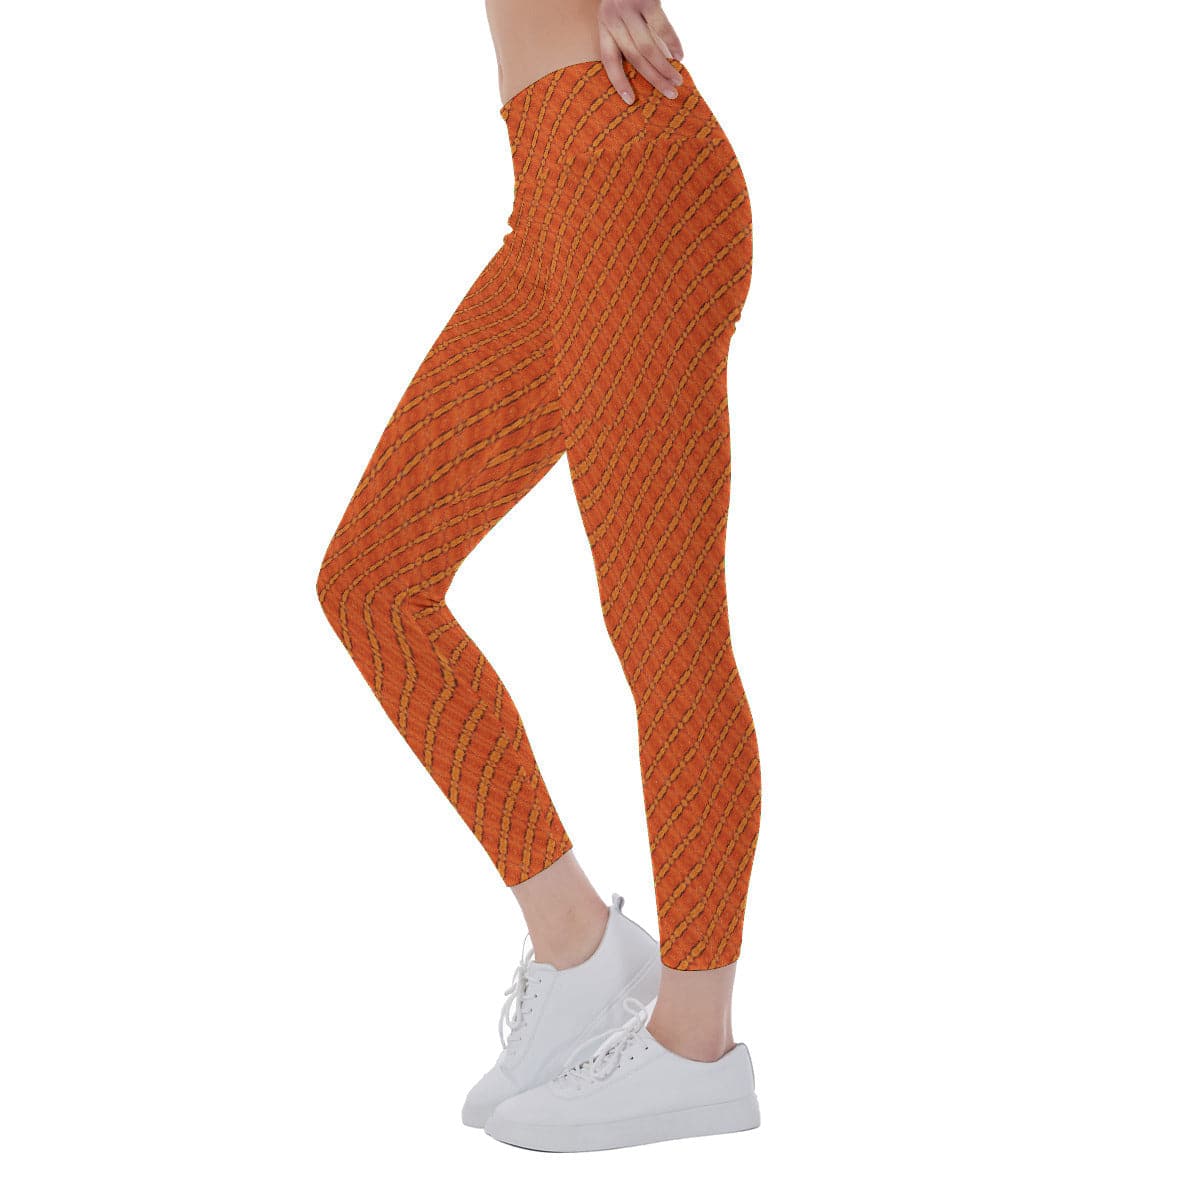 Orange Striped patterned Women's Yoga Leggings, by Sensus Studio Design